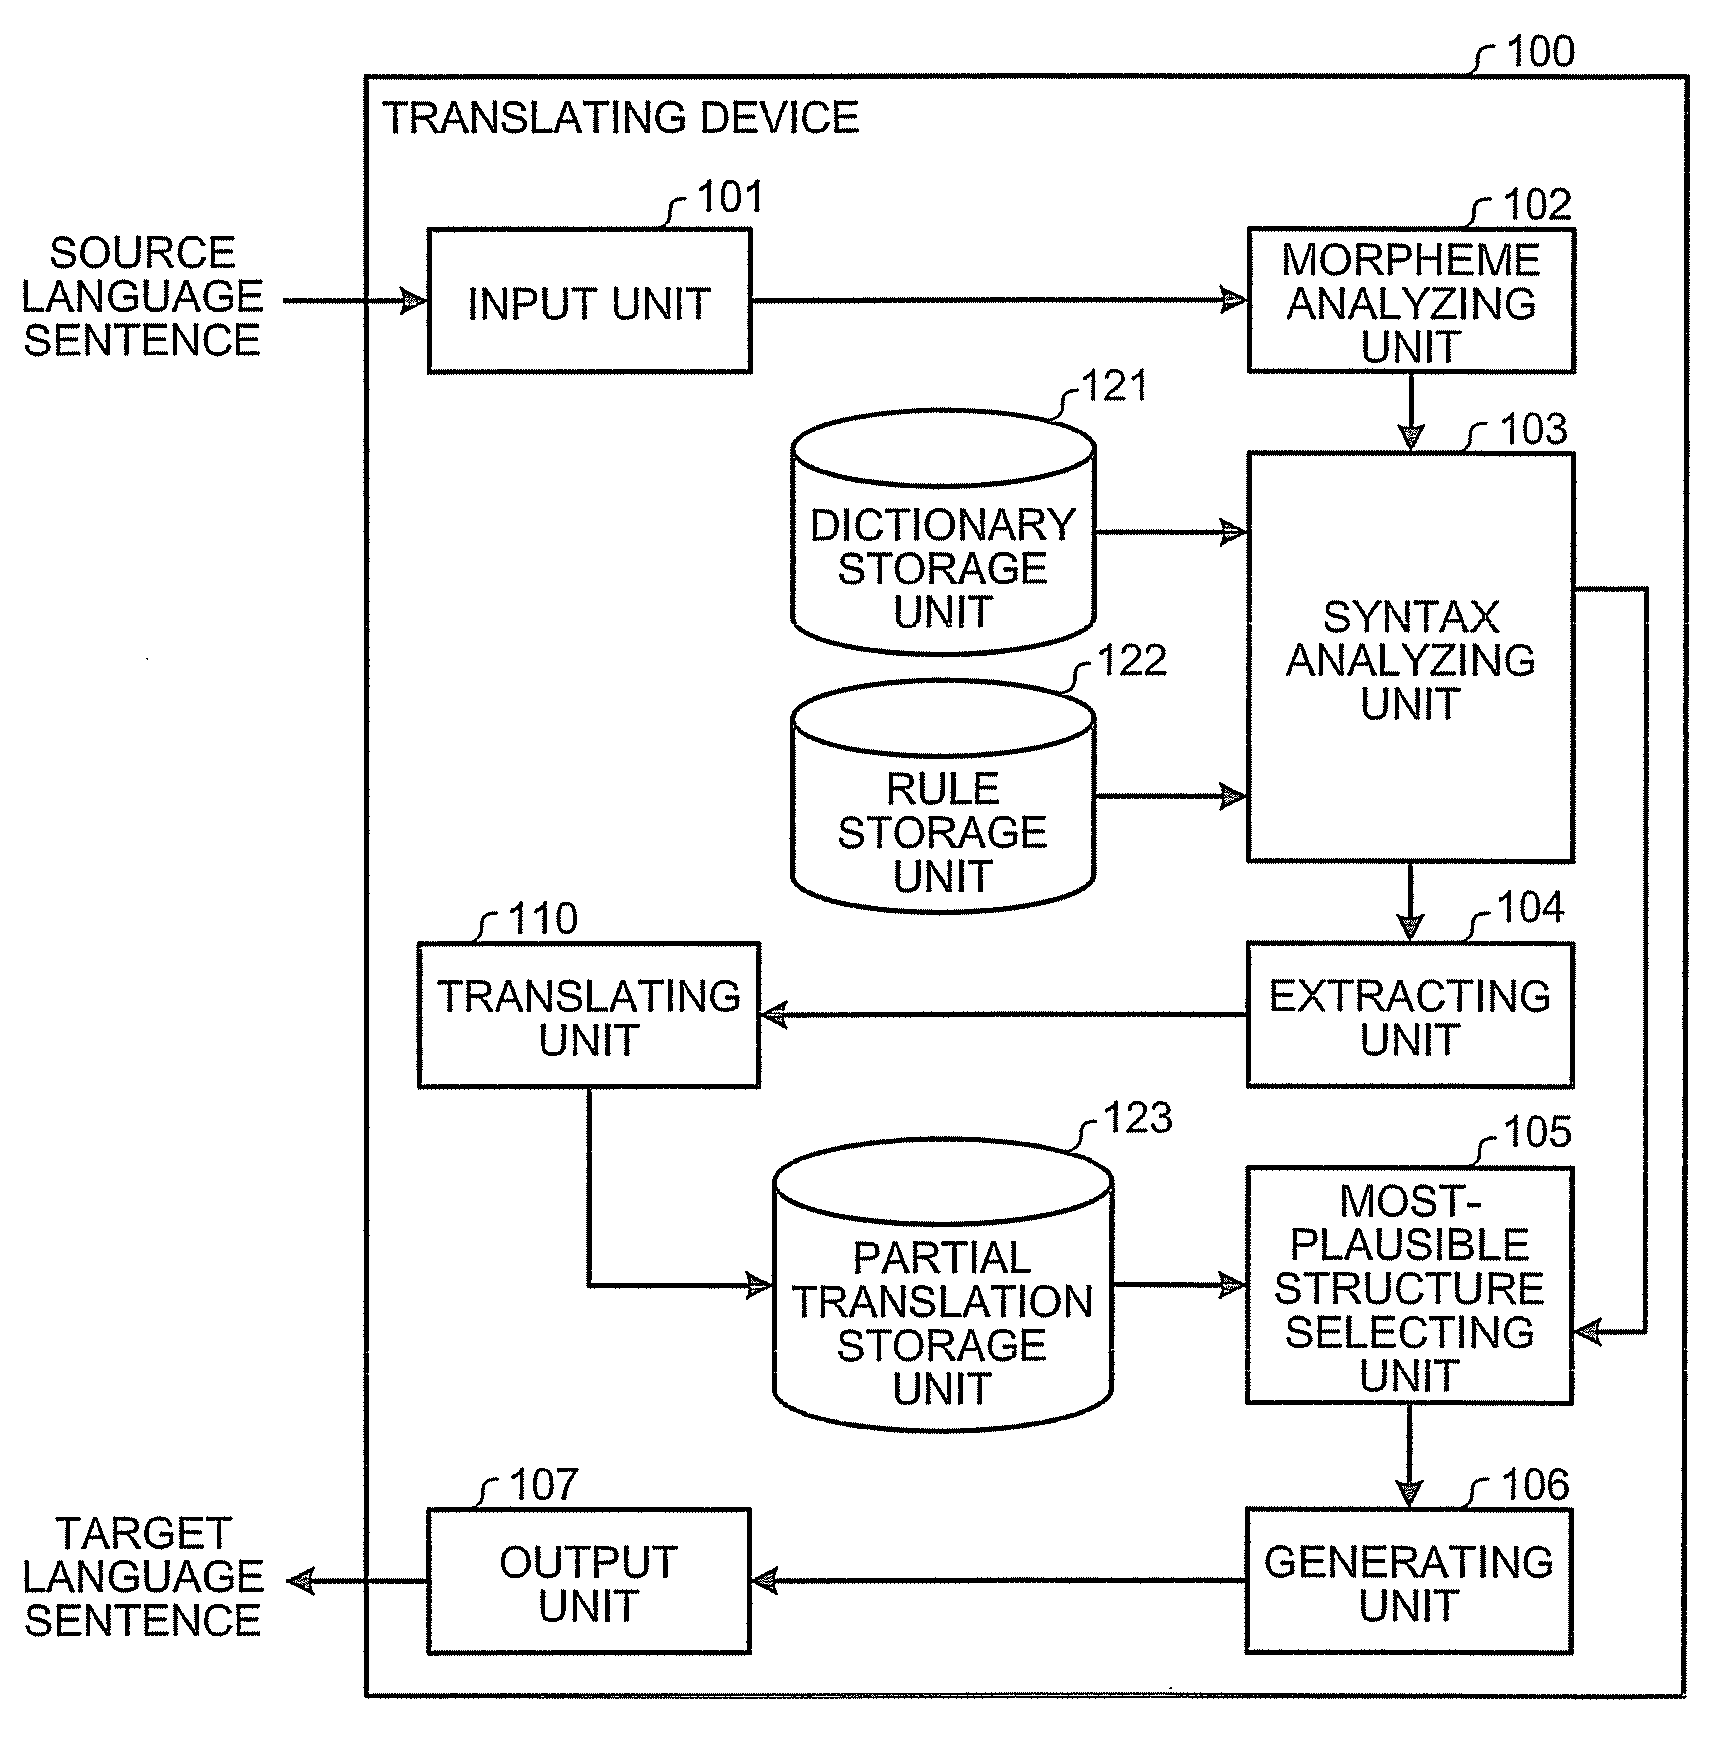 Machine translating apparatus, method, and computer program product